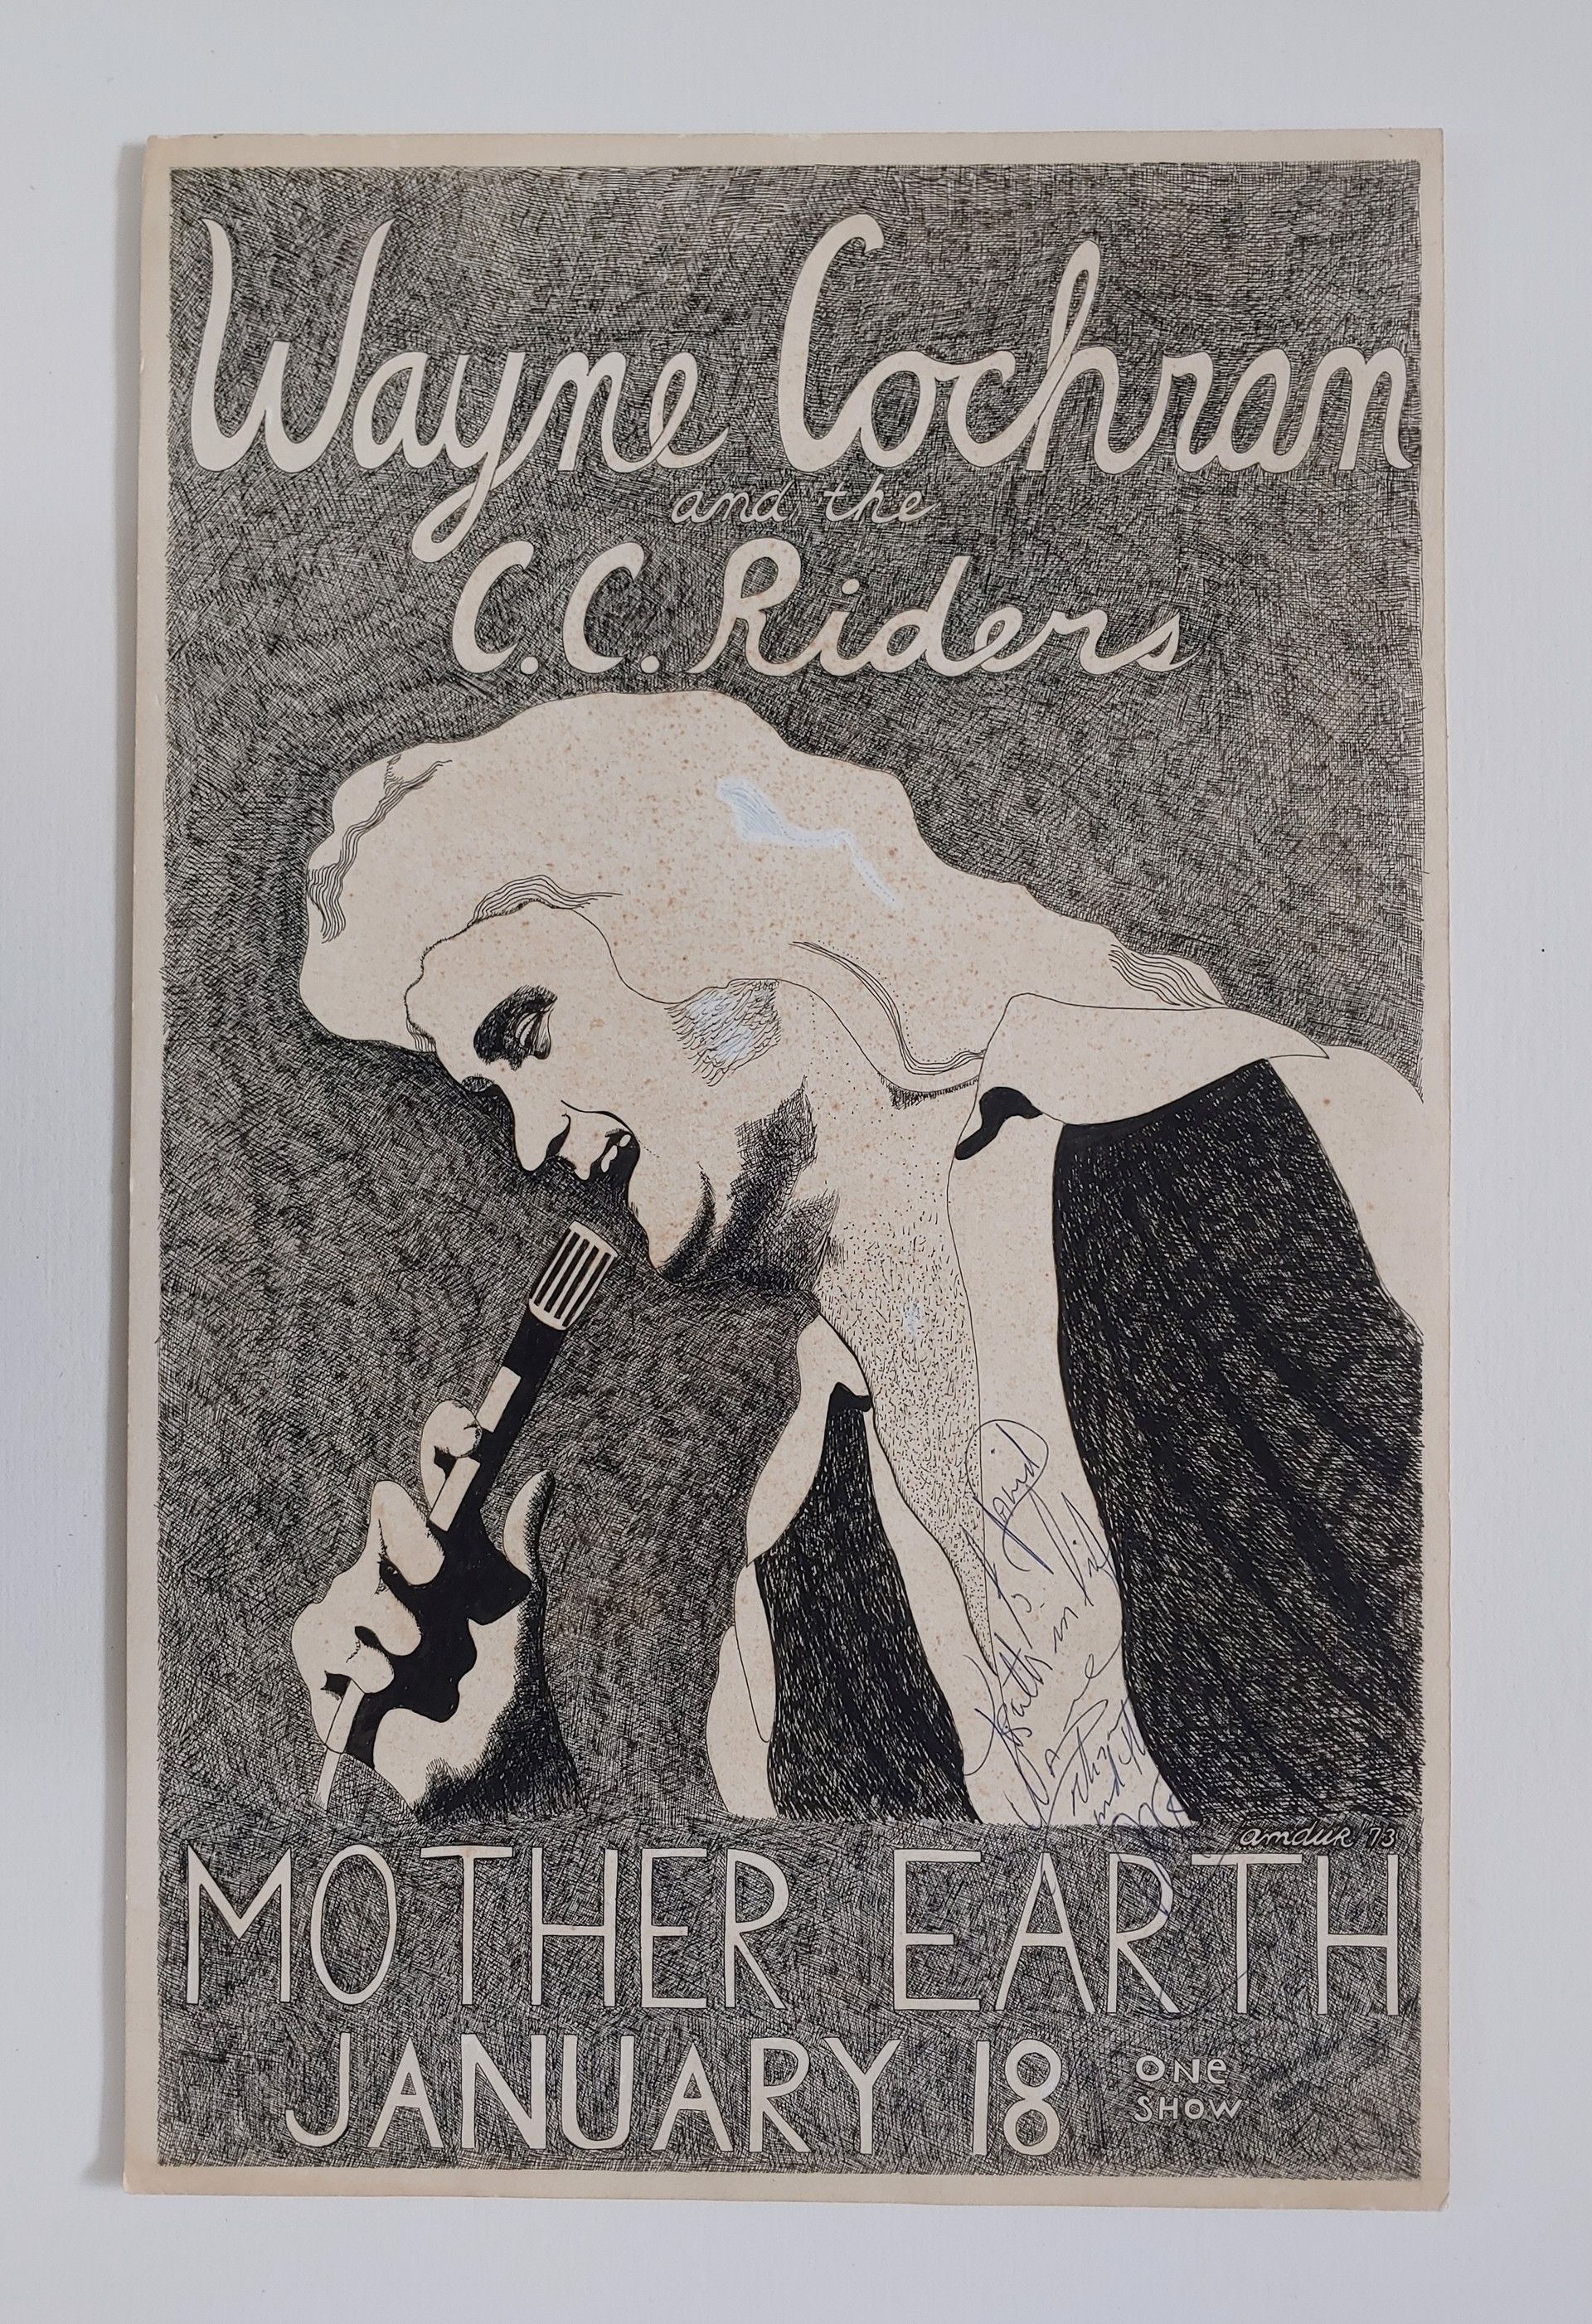 Wayne Cochran Poster Original Drawing- Signed by David Amdur